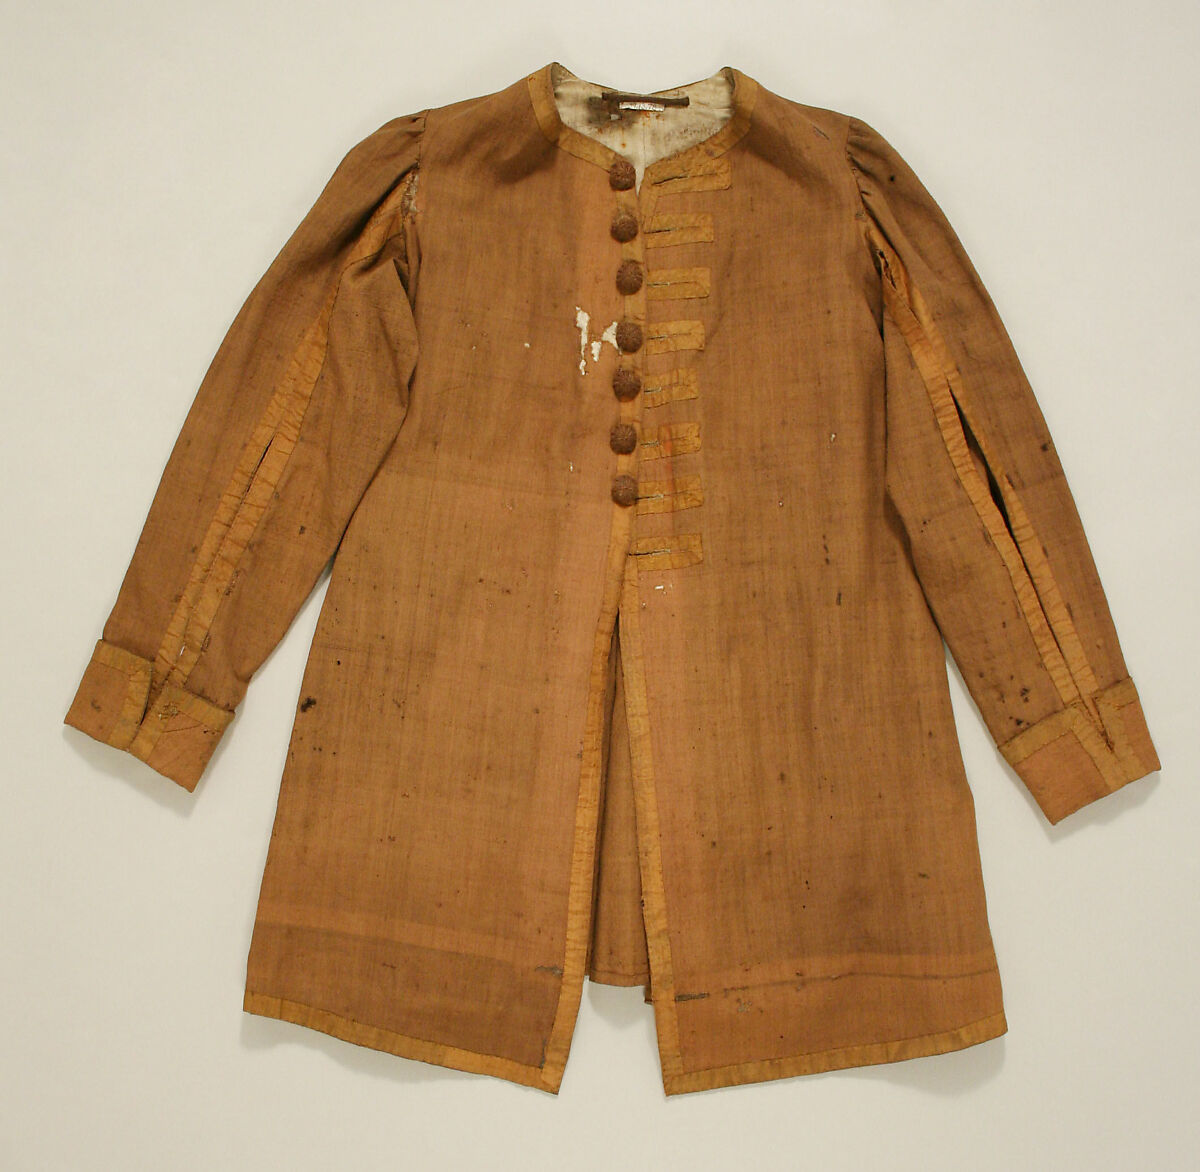 Coat, [no medium available], American or European 